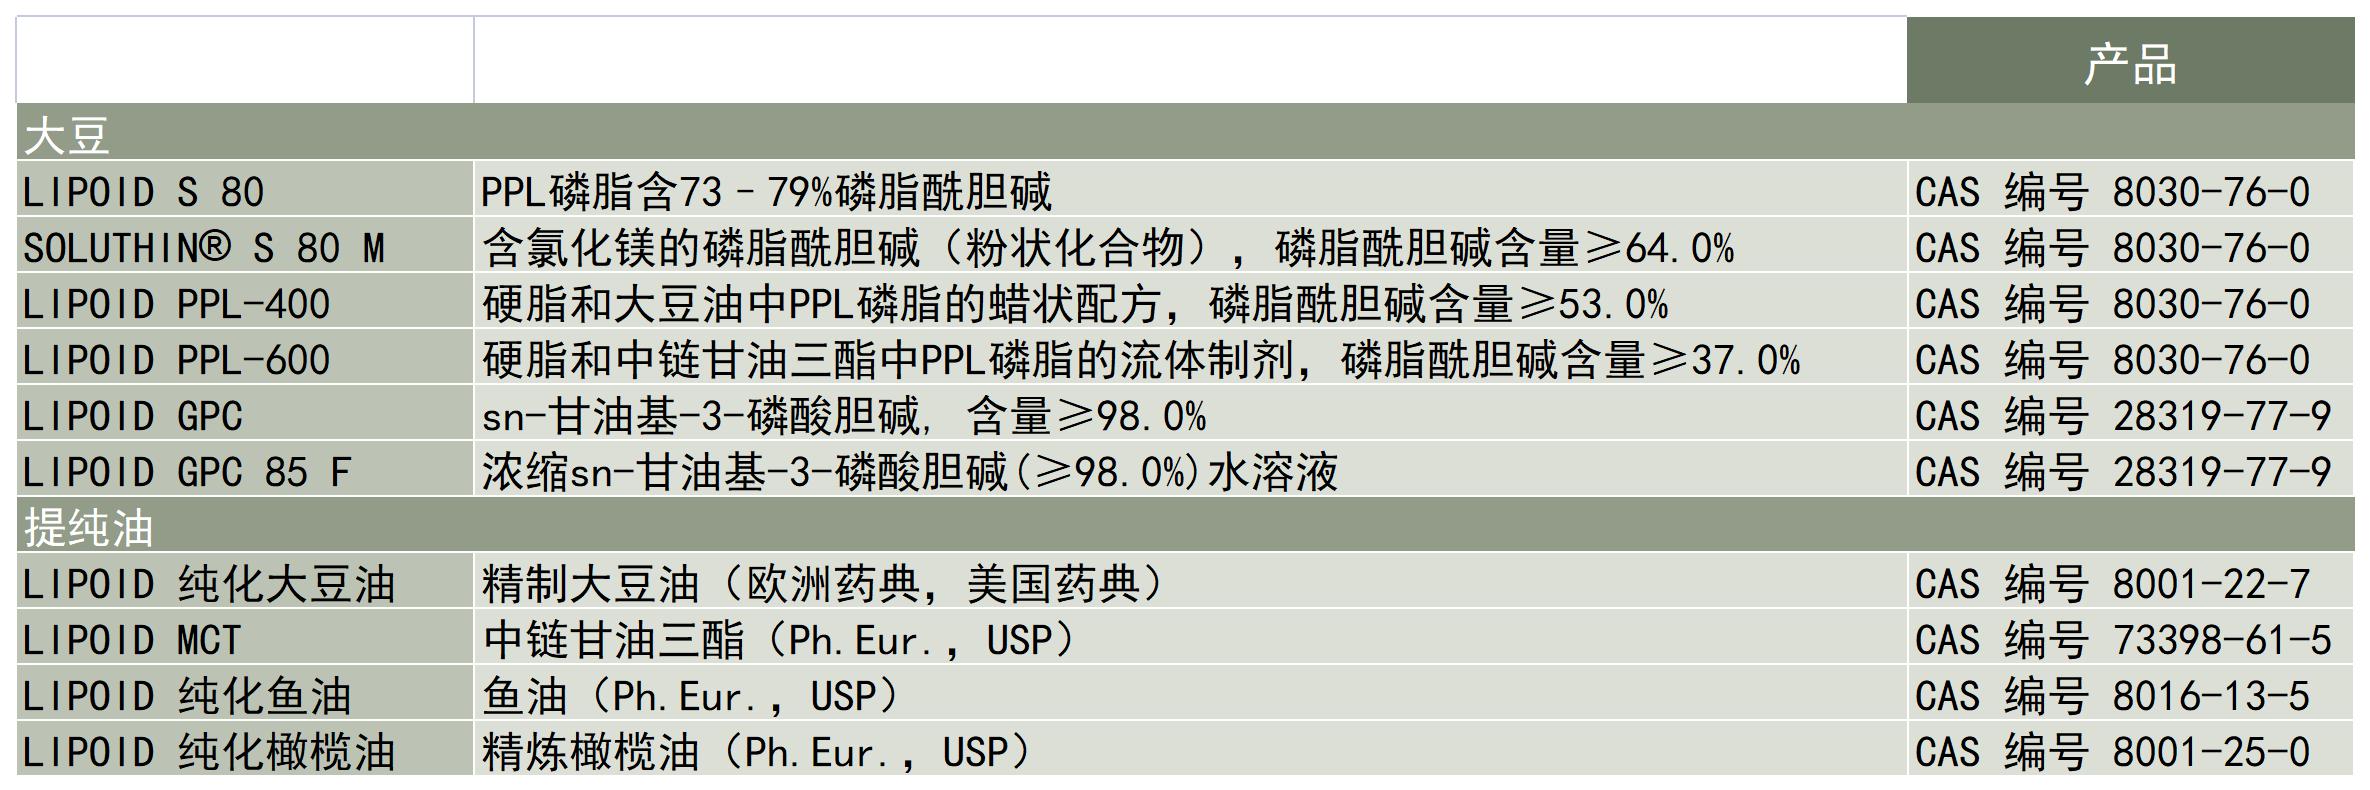 Lipoid-应用-制药应用-活性成分-产品列表_A1C13.jpg